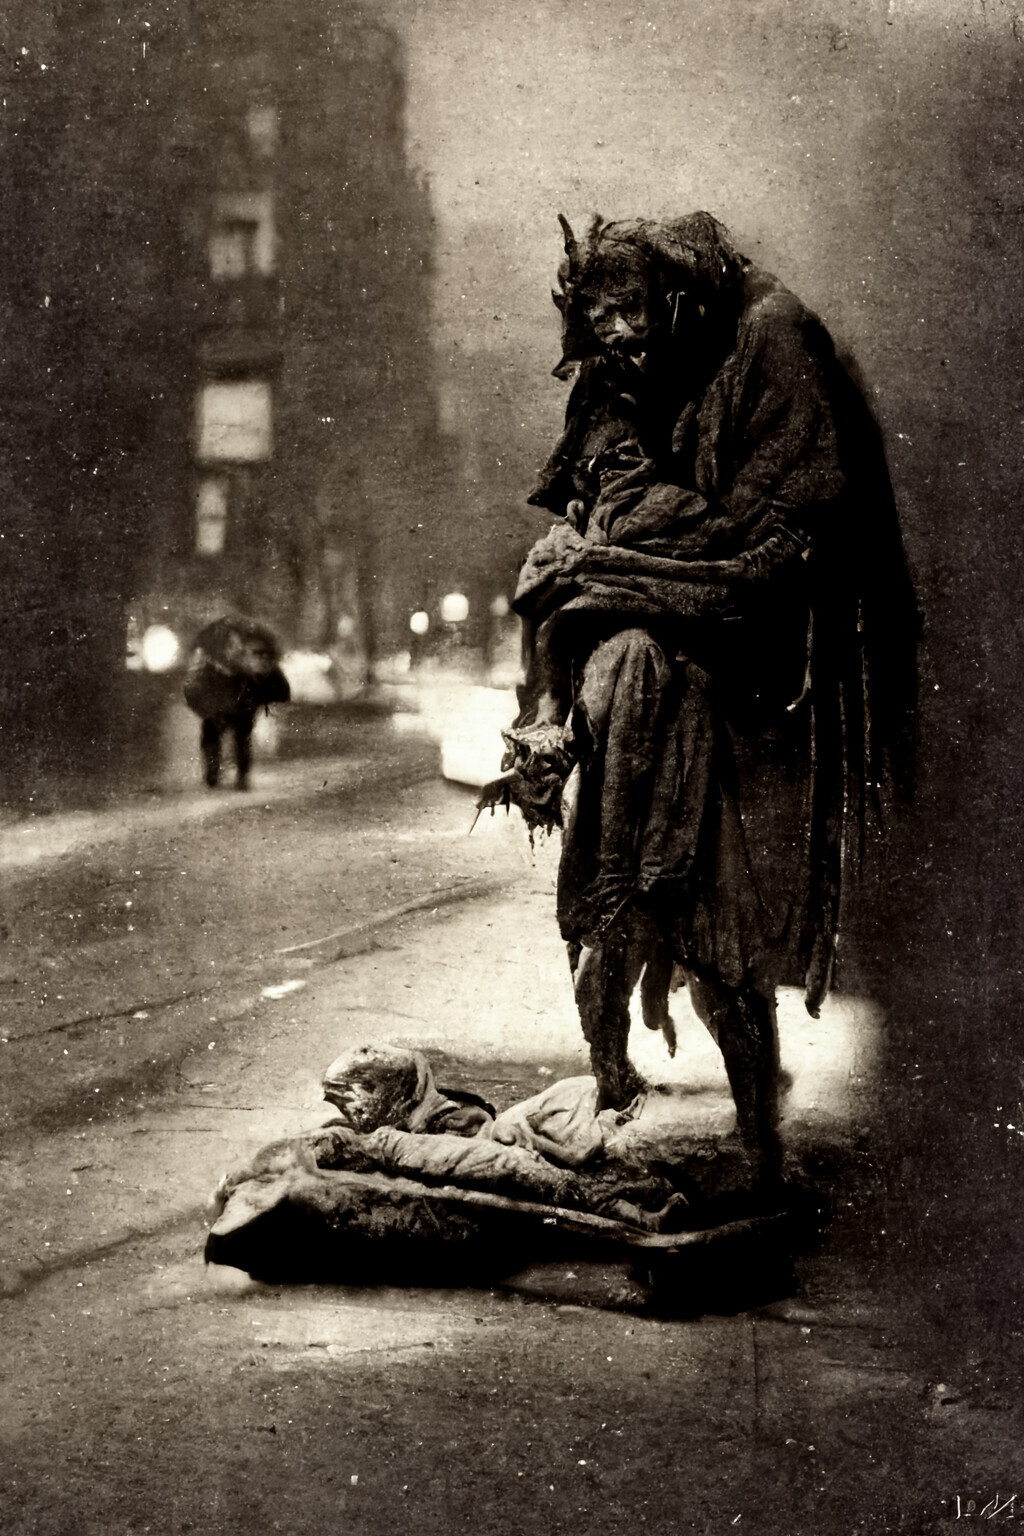 Vagrant
c. 1909
Photograph